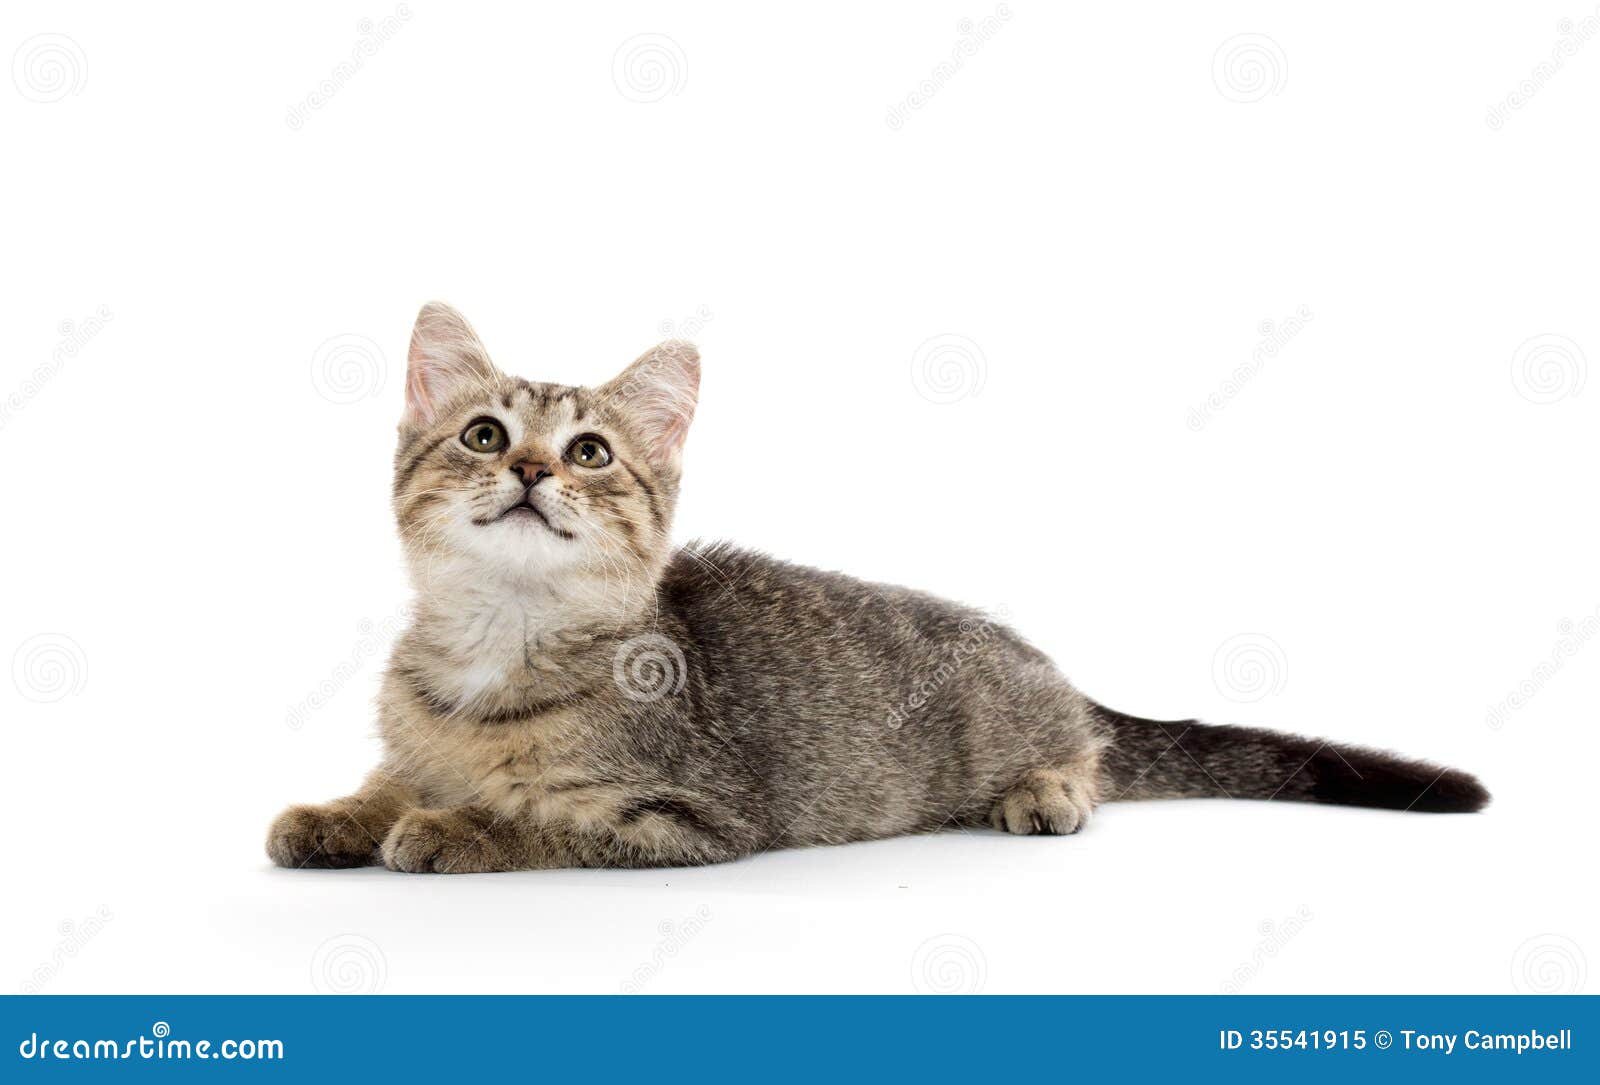  Cute  tabby kitten  stock image Image of down  feline 